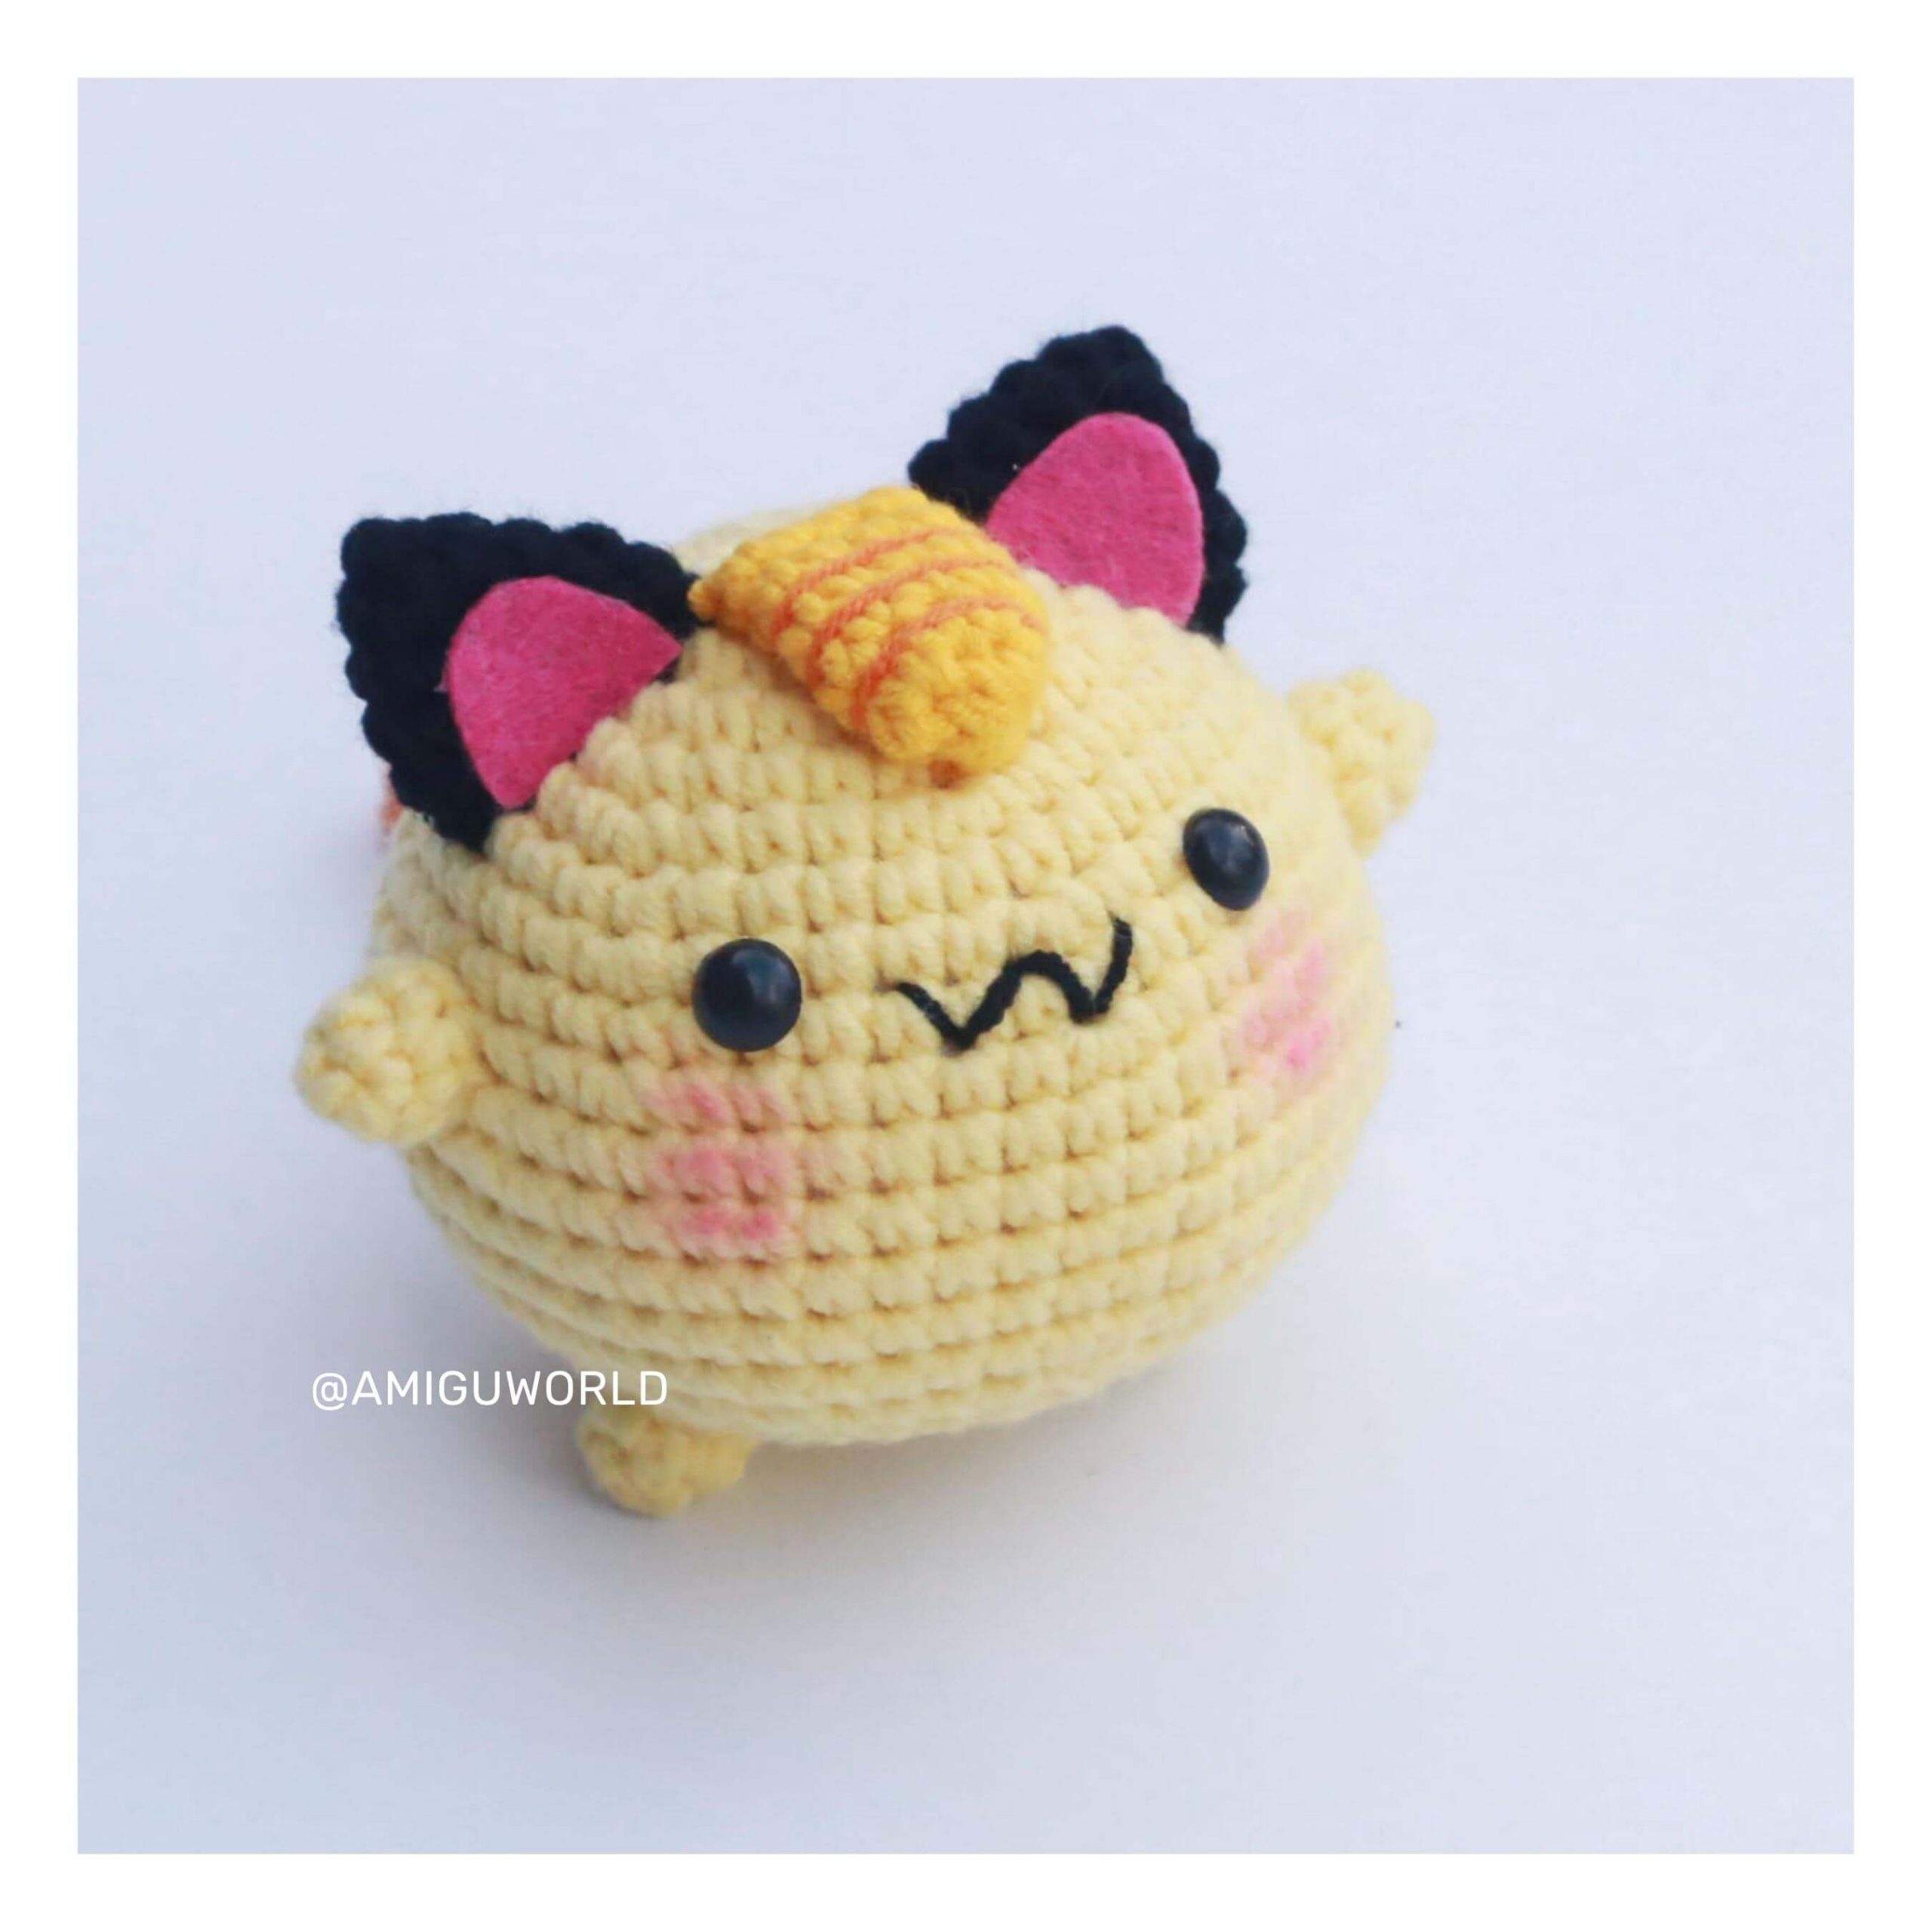 Meowth-amigurumi-crochet-pattern-by-AmiguWorld (2)